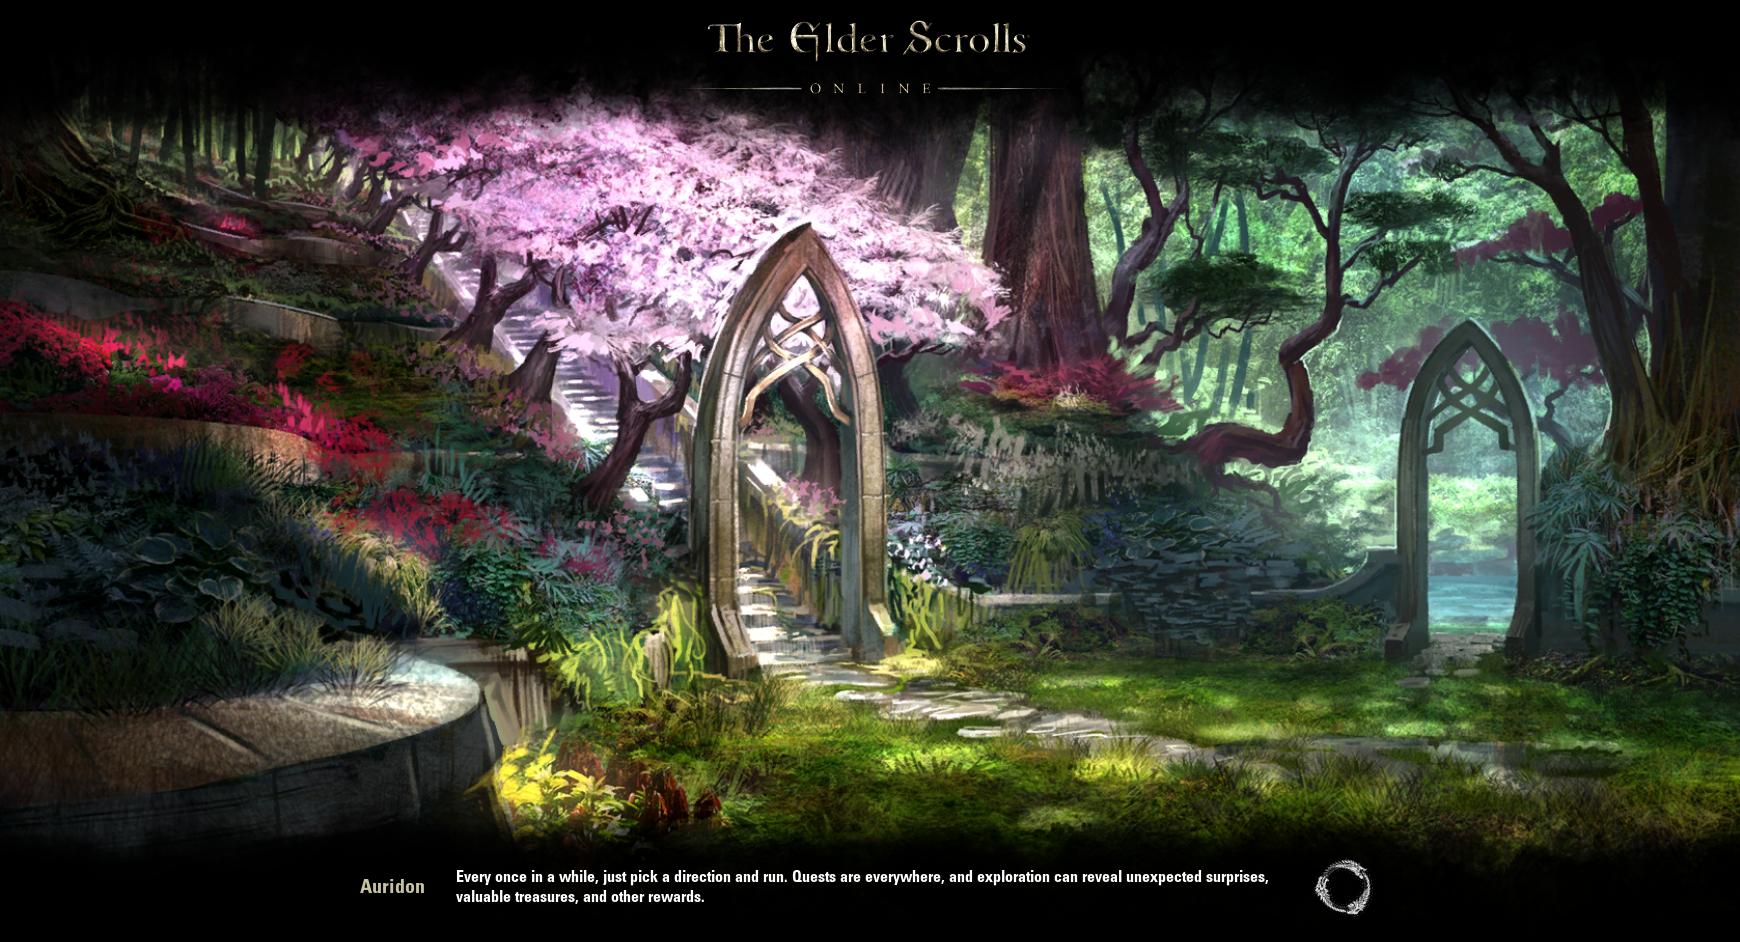 The Elder Scrolls Online load screens